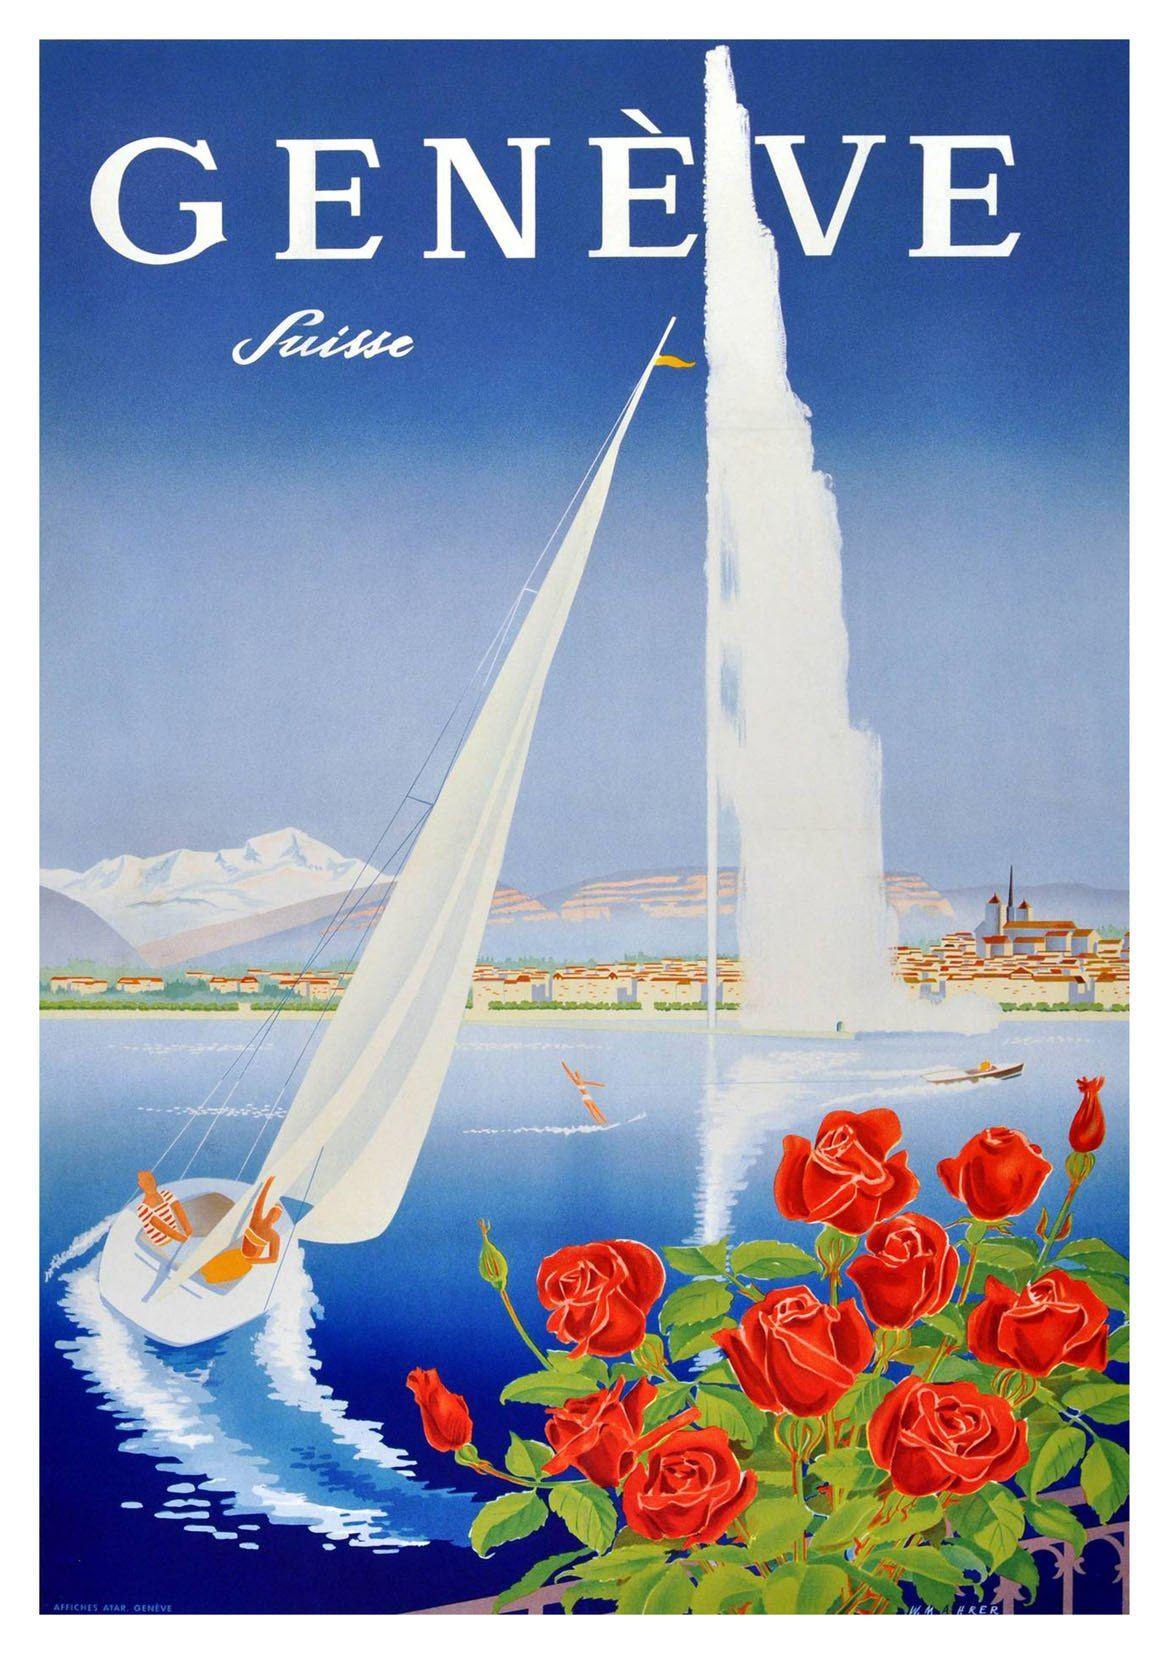 GENEVA TRAVEL POSTER: Vintage Swiss Geneve Advert - Pimlico Prints